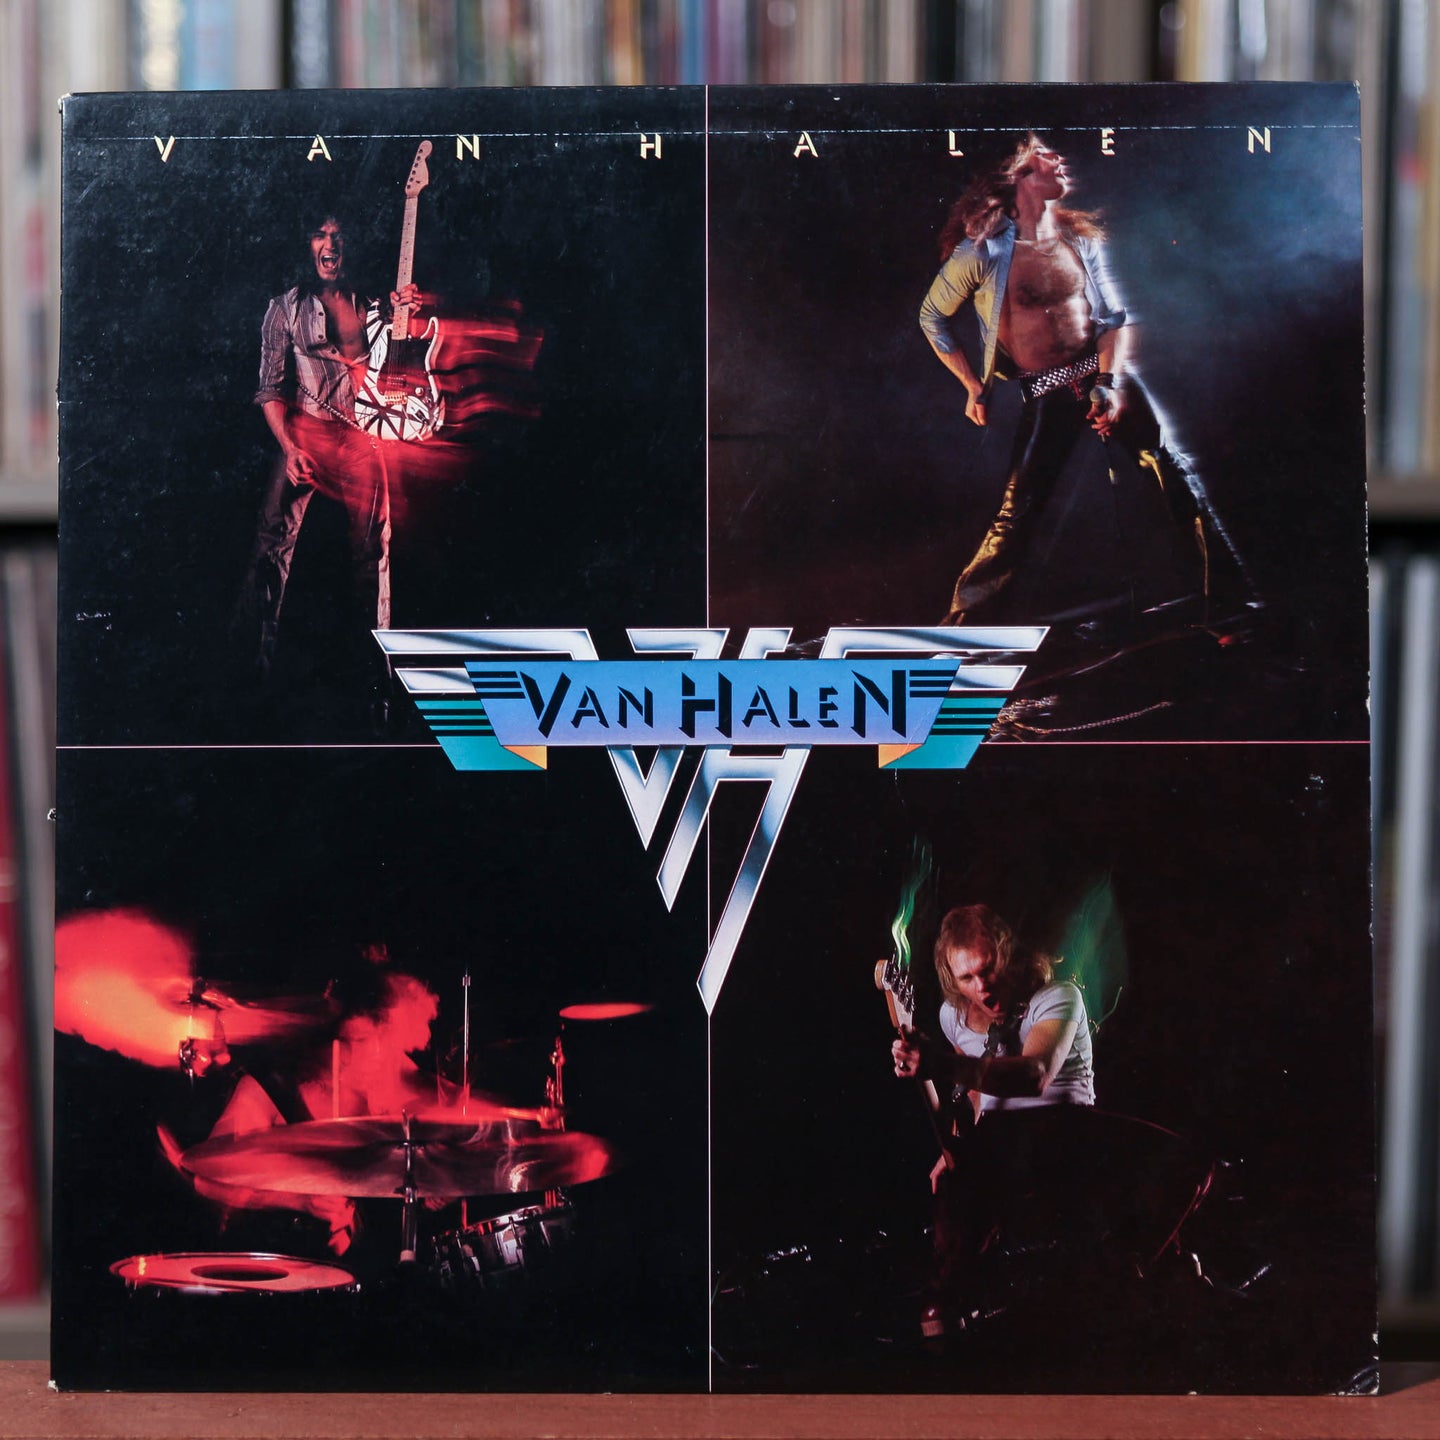 Van Halen - Self-titled - 1978 Warner Bros, VG+/EX